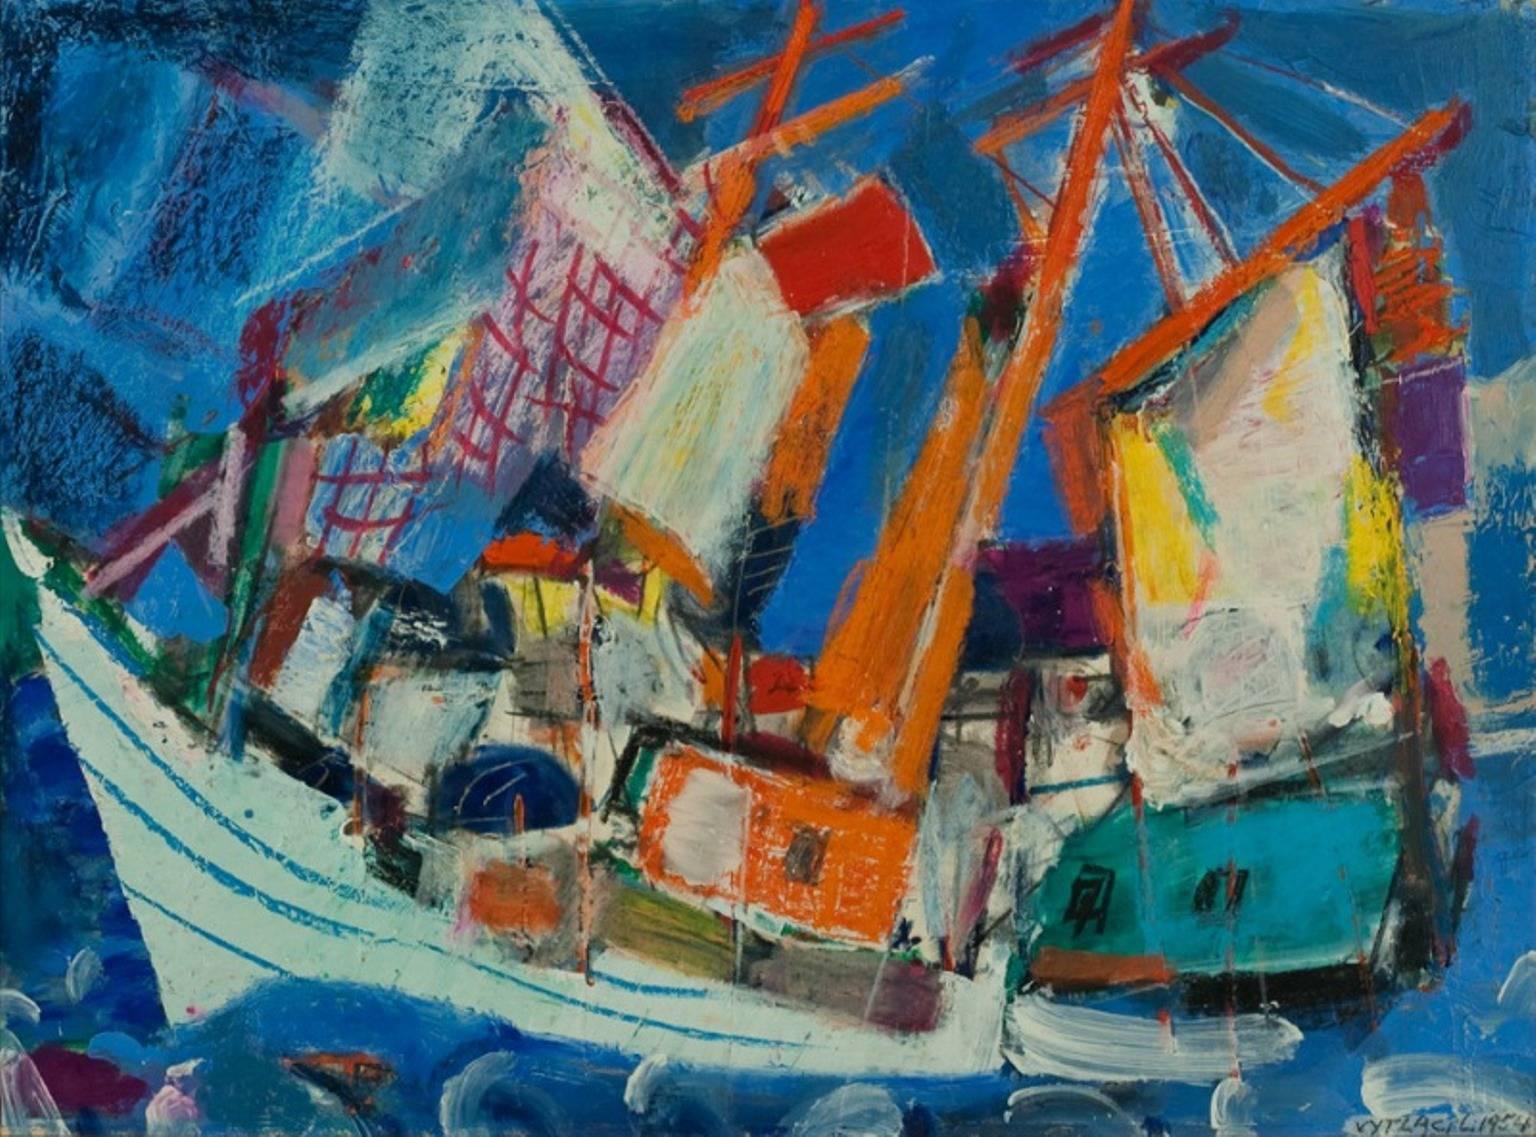 „Vineyard-Fischboot“ – Painting von Vaclav Vytlacil